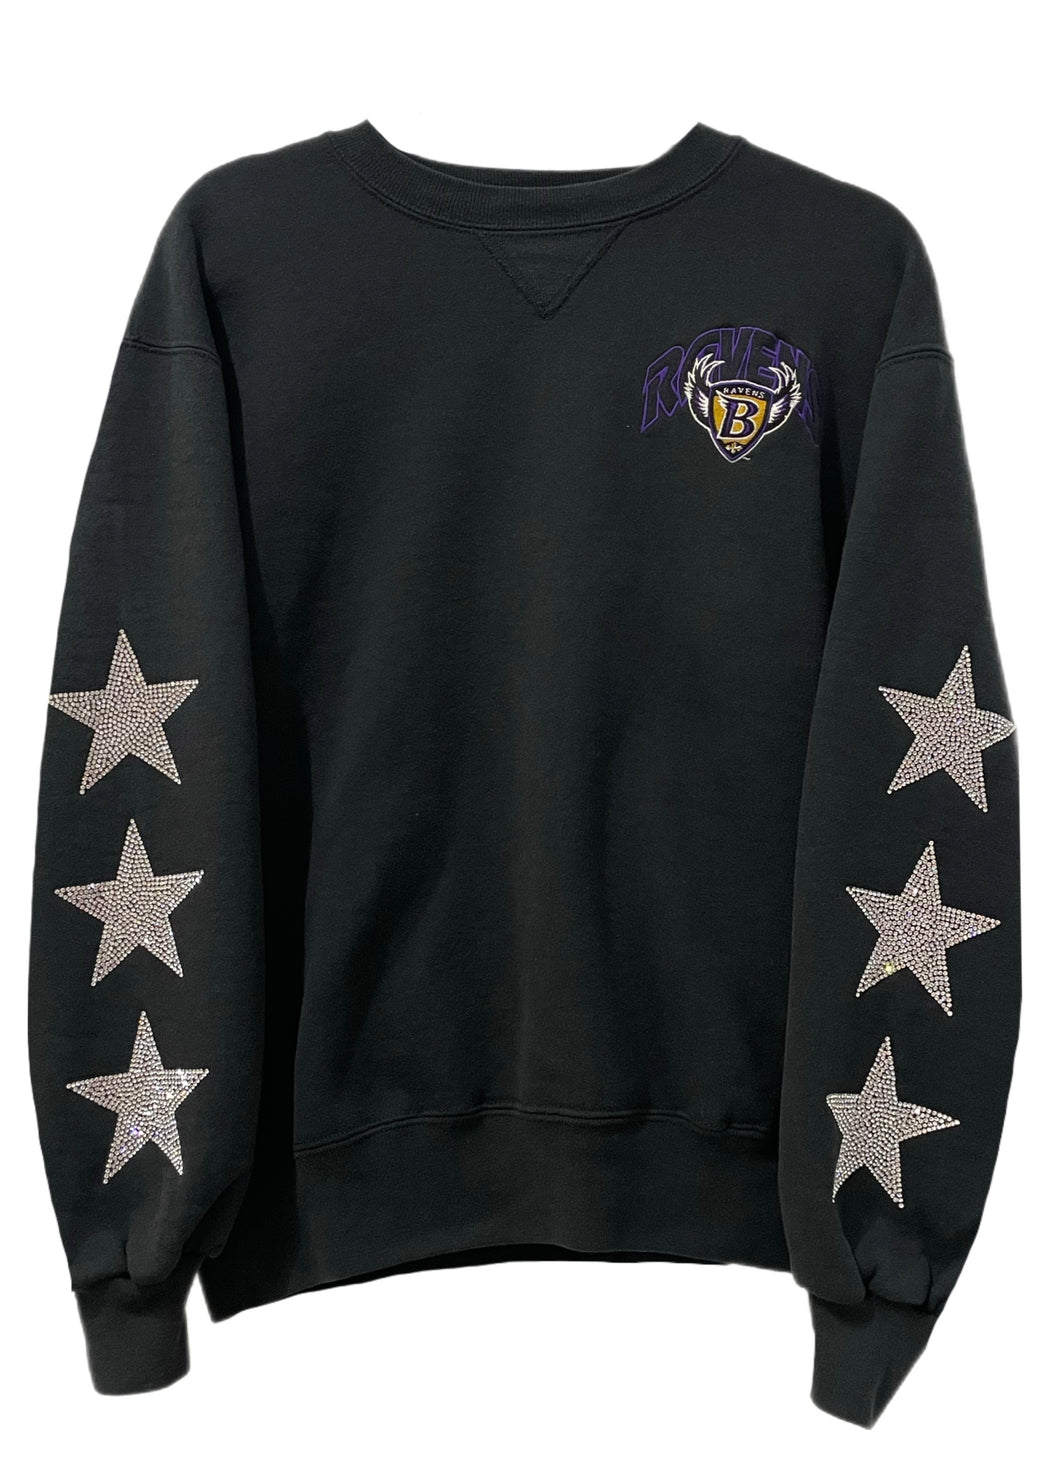 Baltimore Ravens, Football One of a KIND Vintage Sweatshirt with Three Crystal Star Design